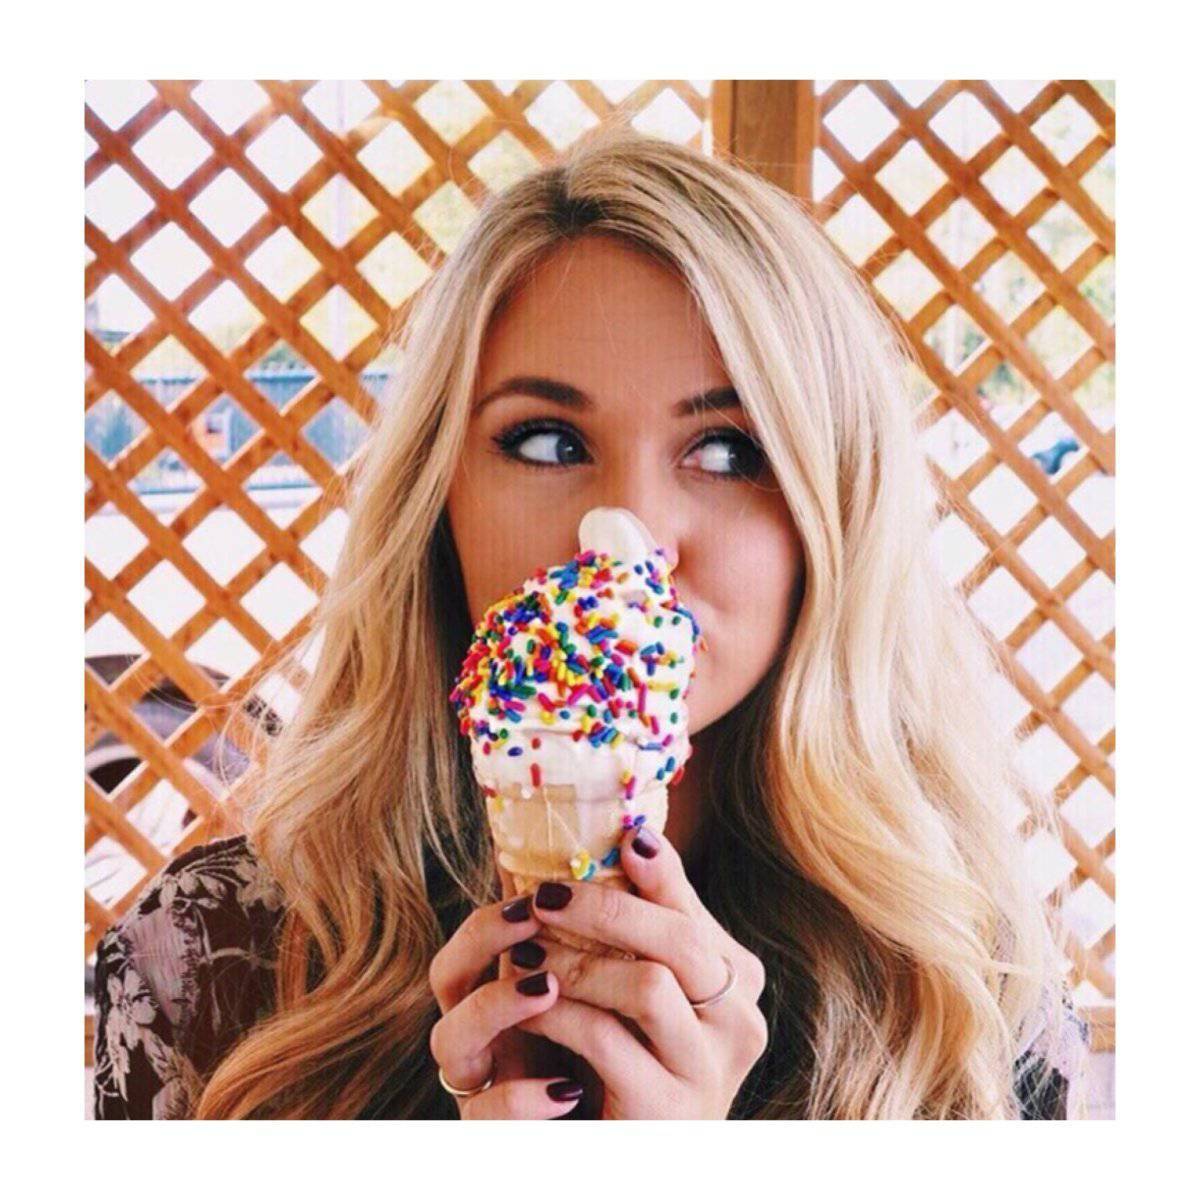 Мороженое на г. Девушка с мороженым. Красивая девушка с мороженым. Фотосессия с мороженым. Красивое мороженое.